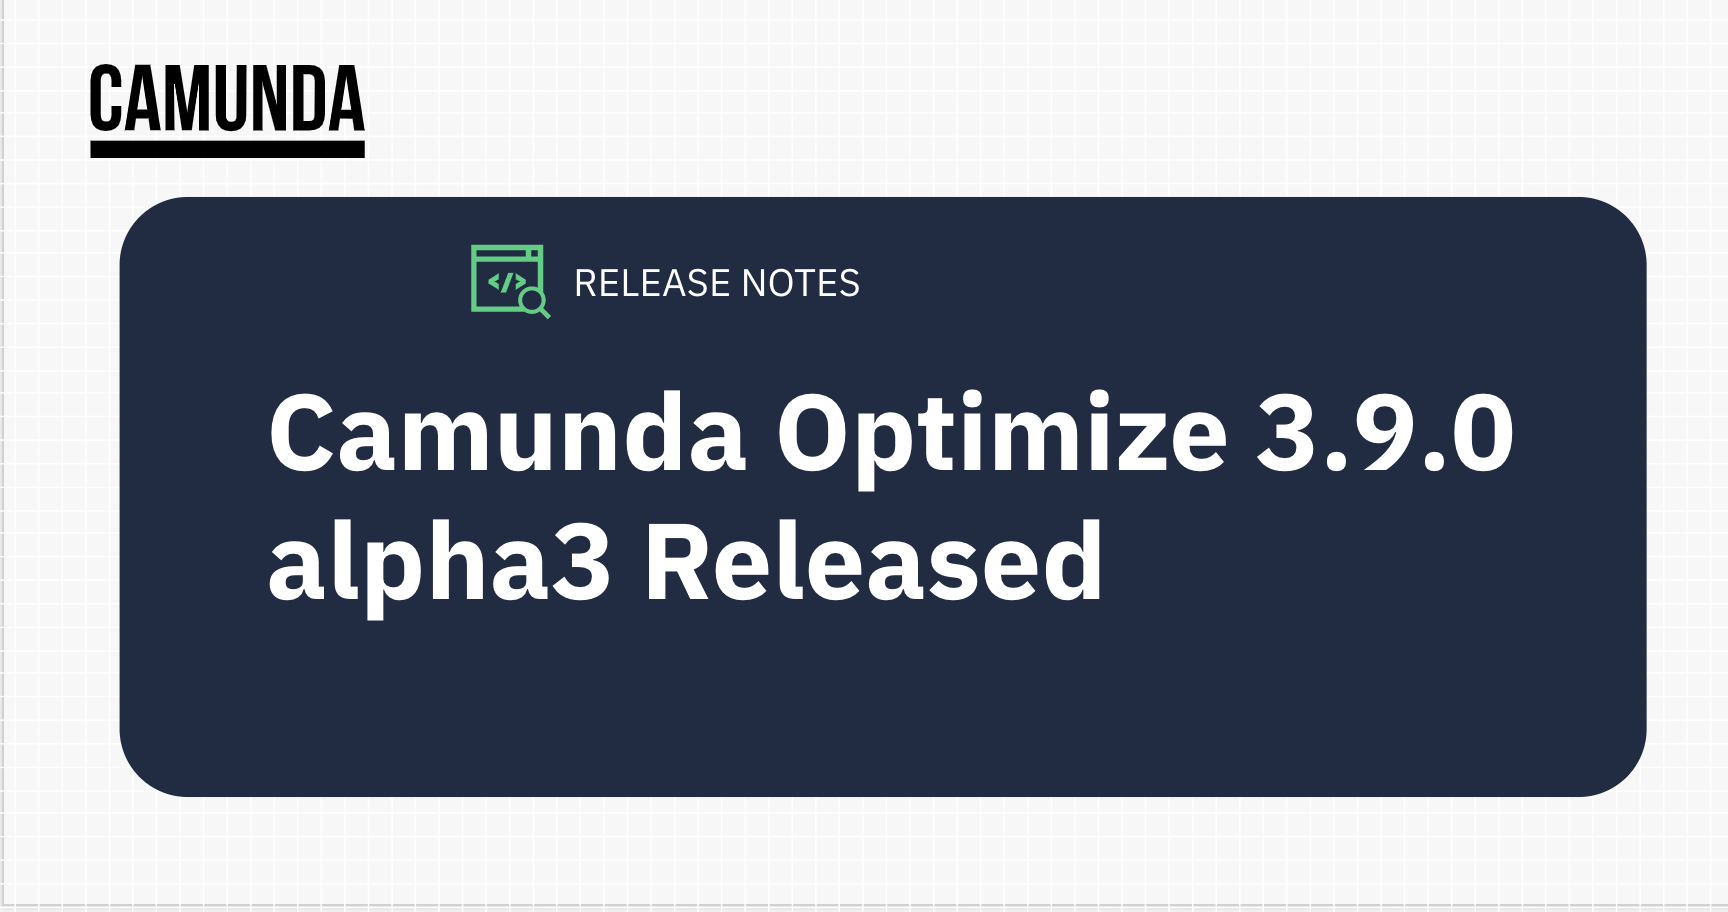 A title slide that reads "Camunda Optimize 3.9.0 alpha3 Released